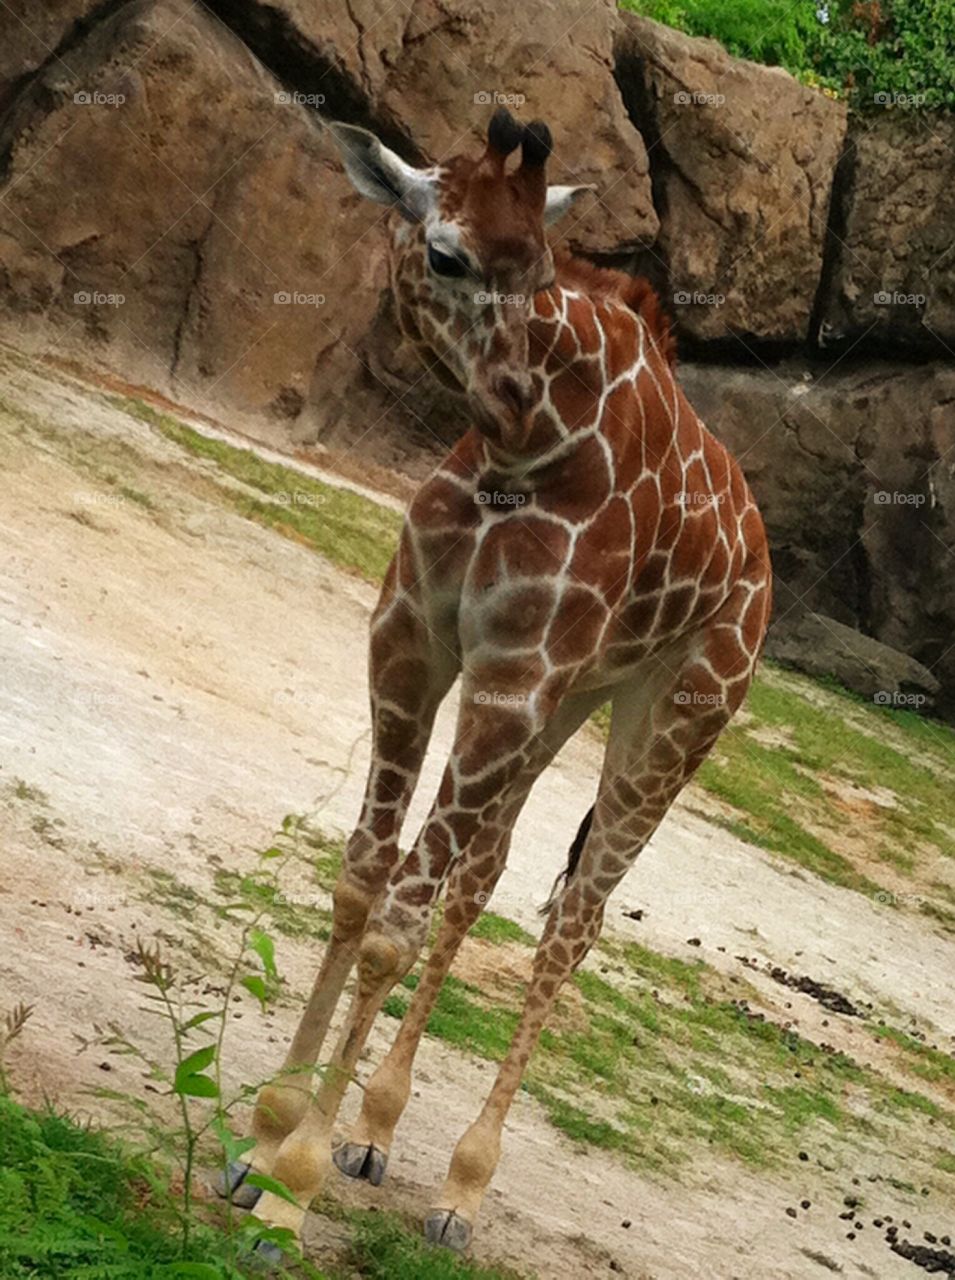 The Amazing World of the Giraffes